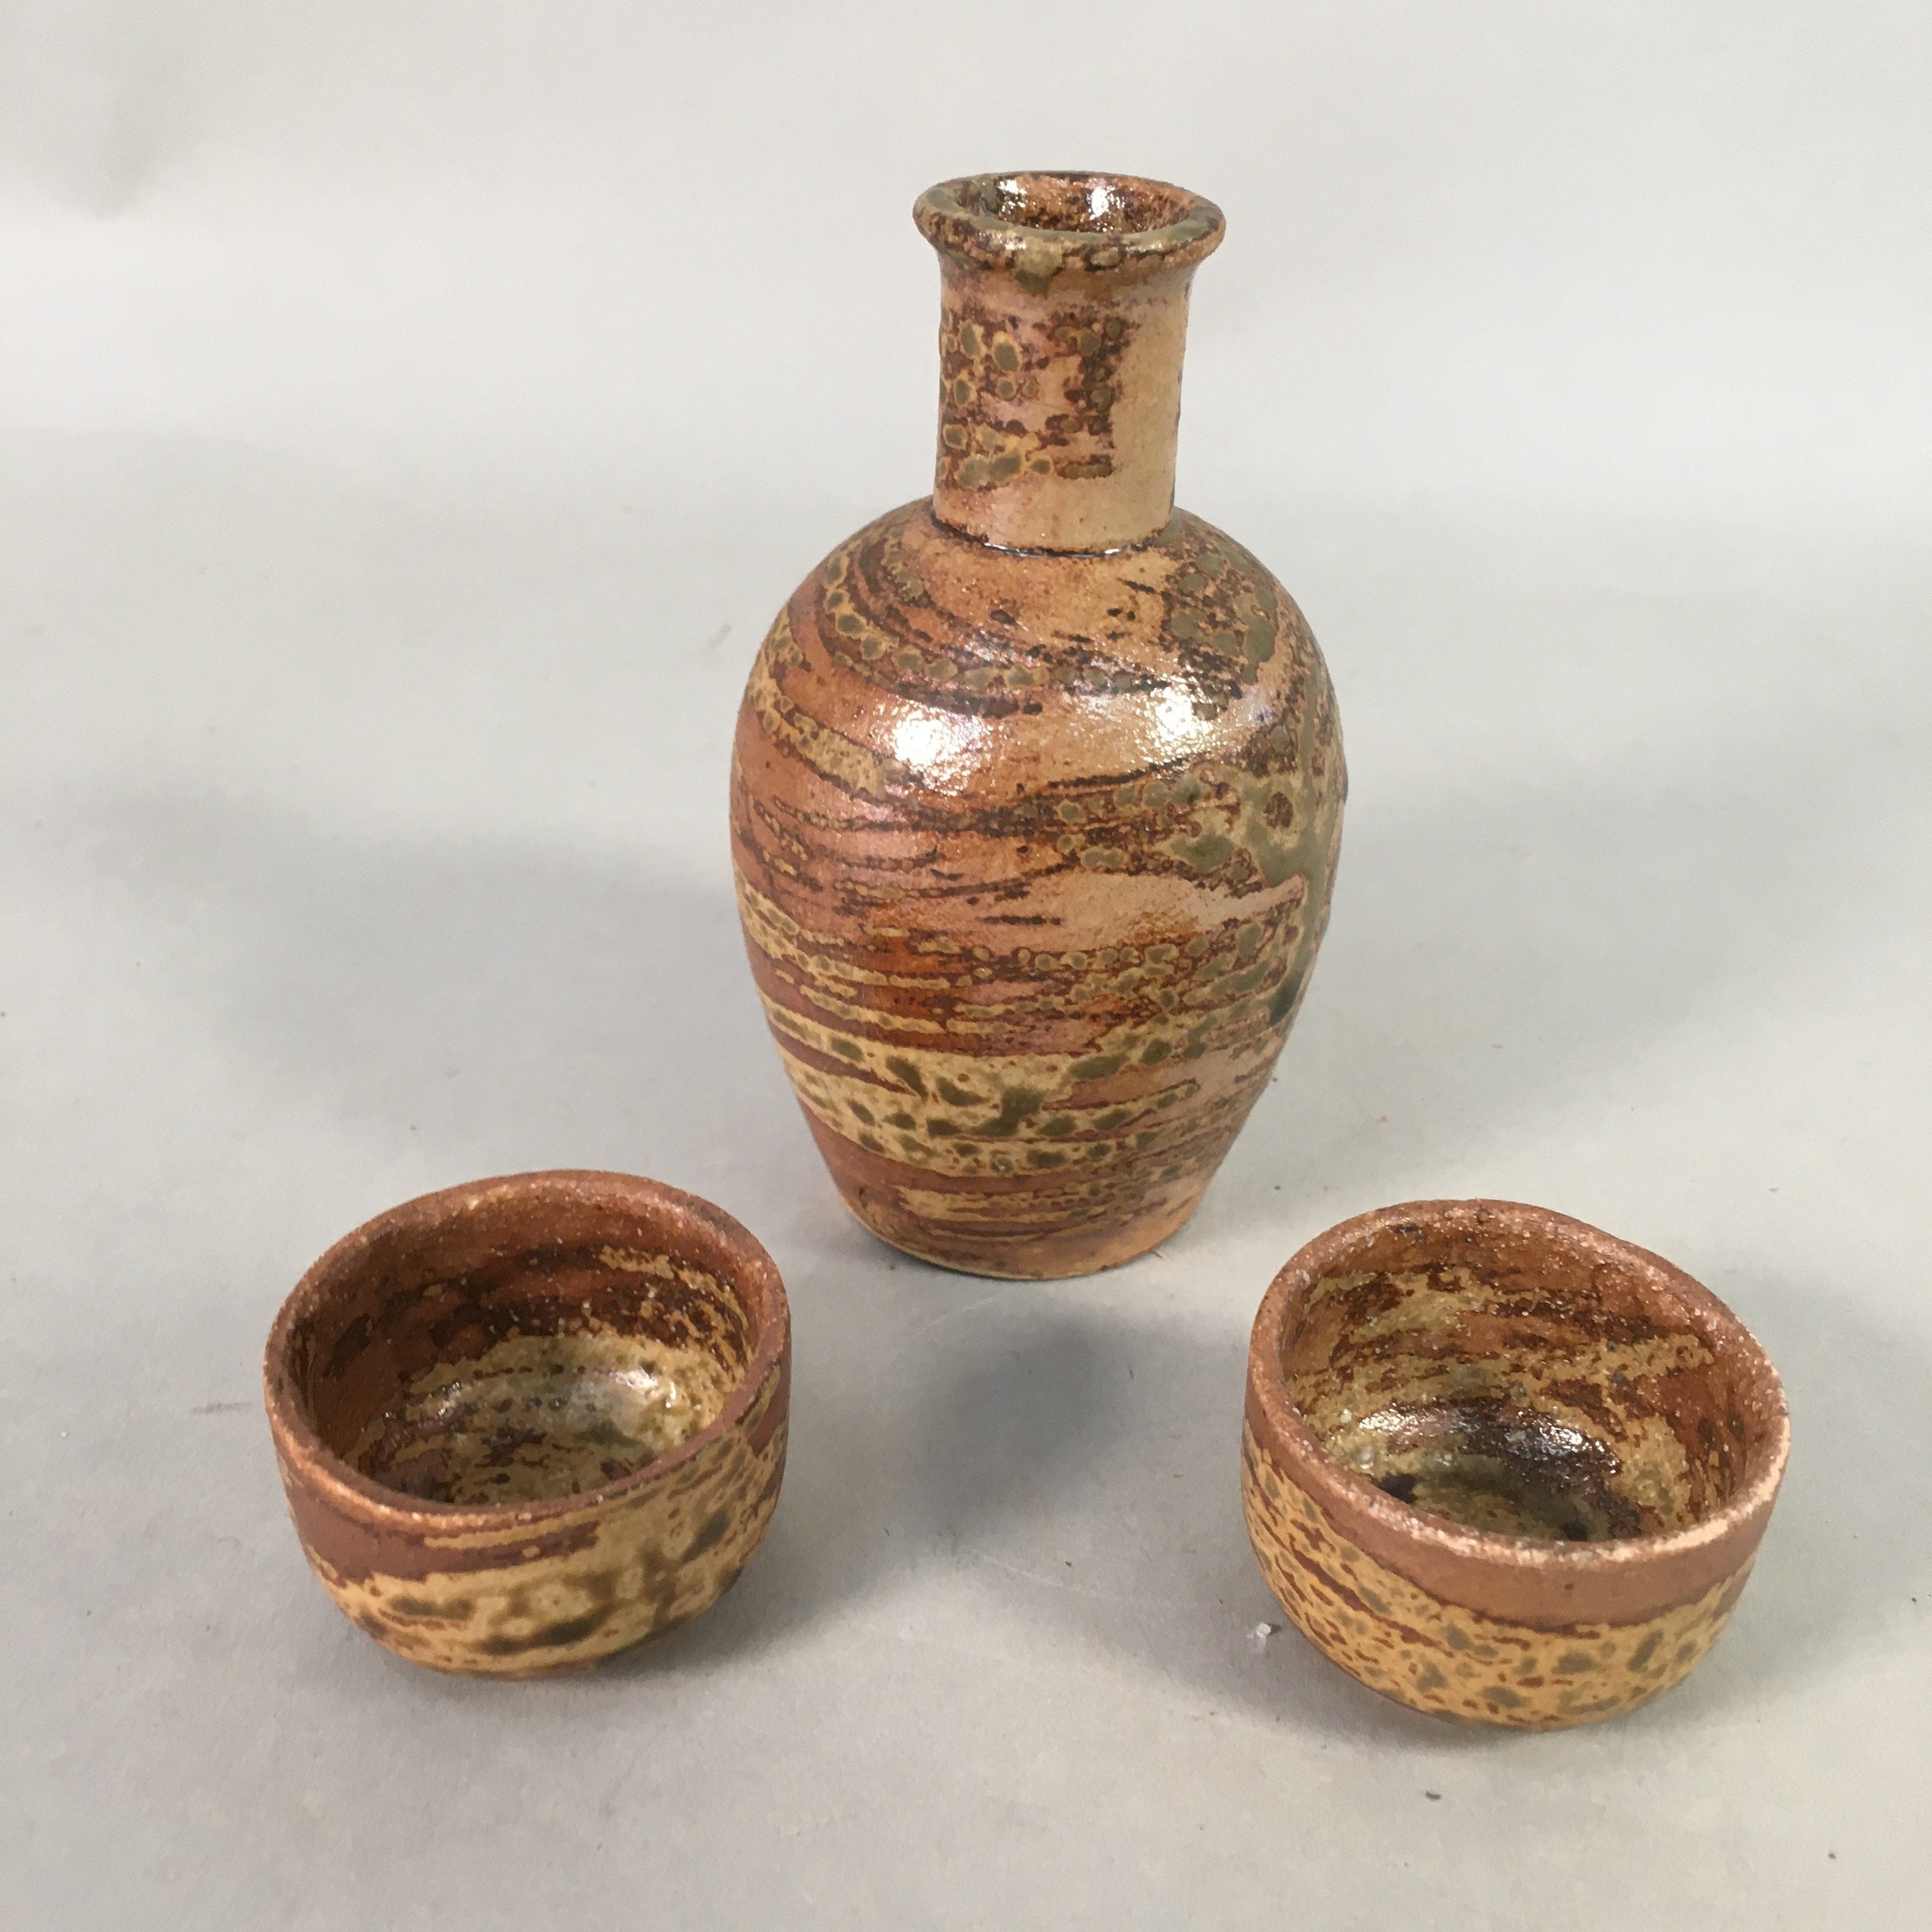 Japanese Vtg Ceramic Sake Bottle Cups Set Pottery Brown Glaze Tokkuri TS260